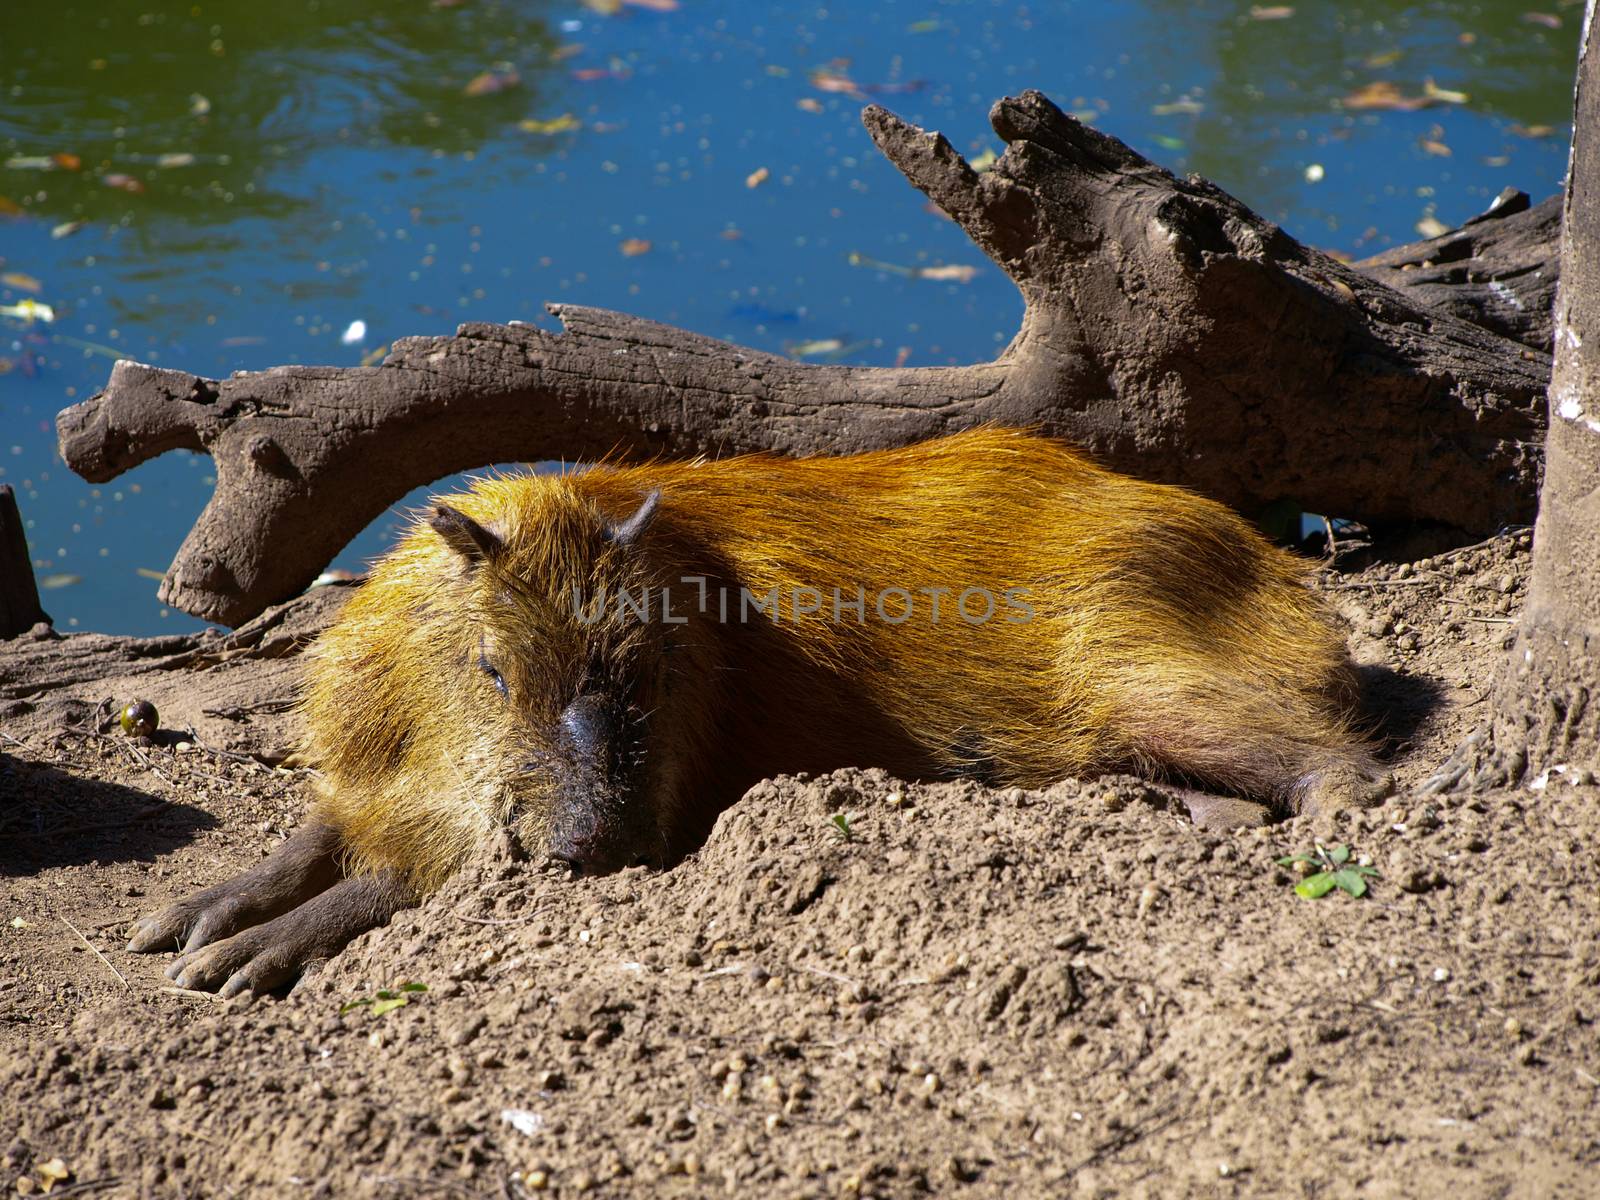 Capybara - World's biggest rodent (Bolivia)